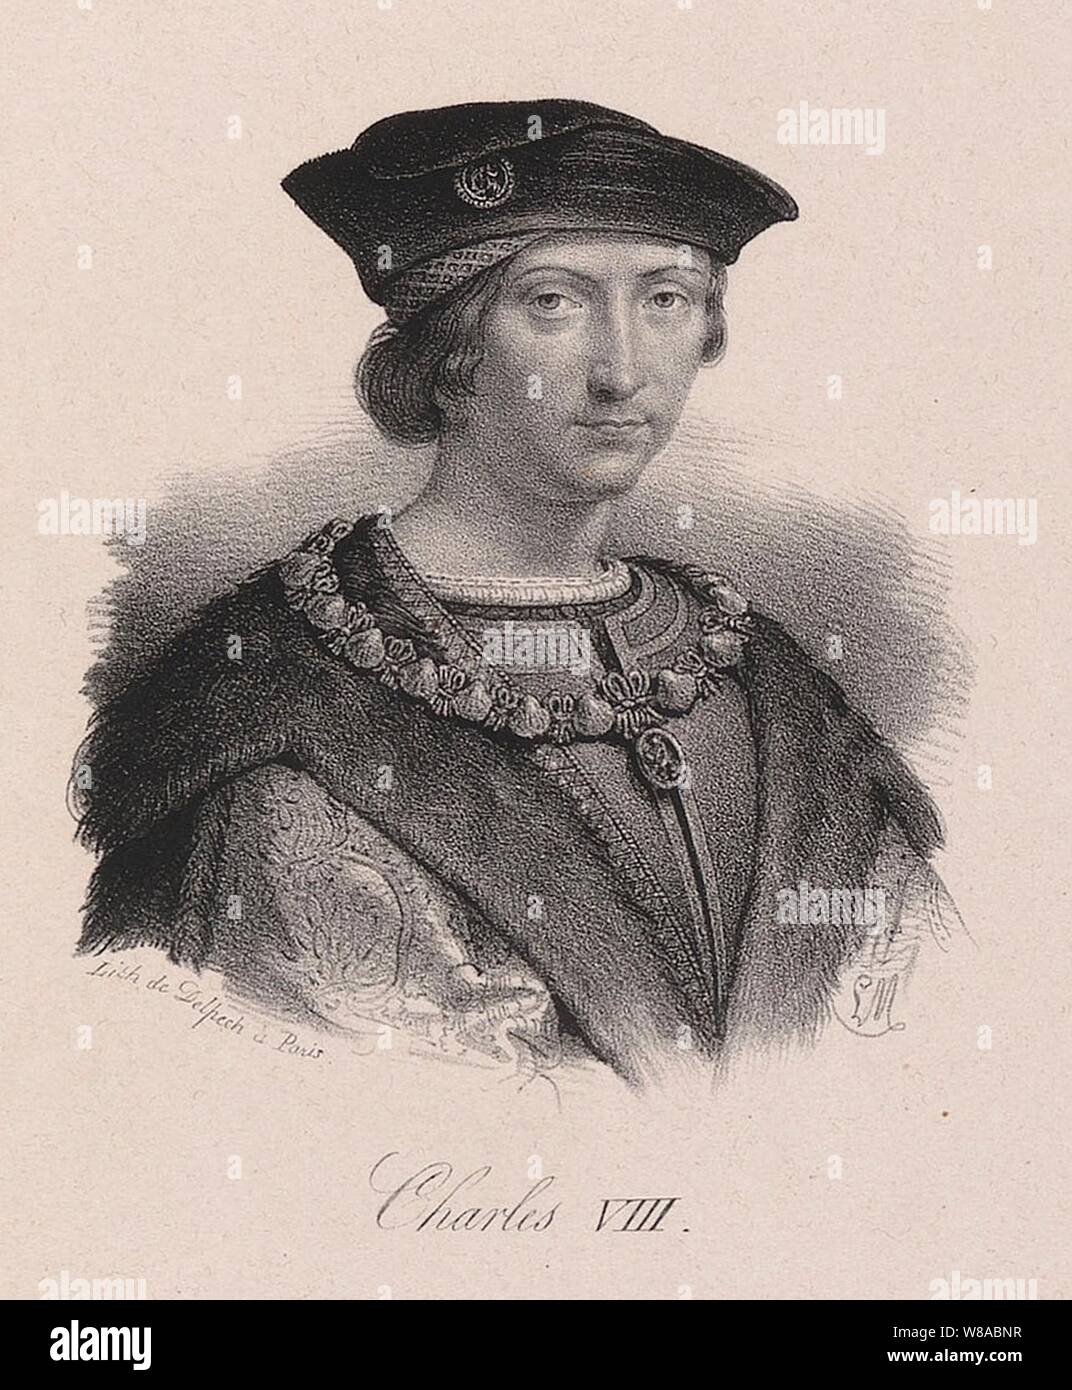 Delpech - Charles VIII of France. Stock Photo